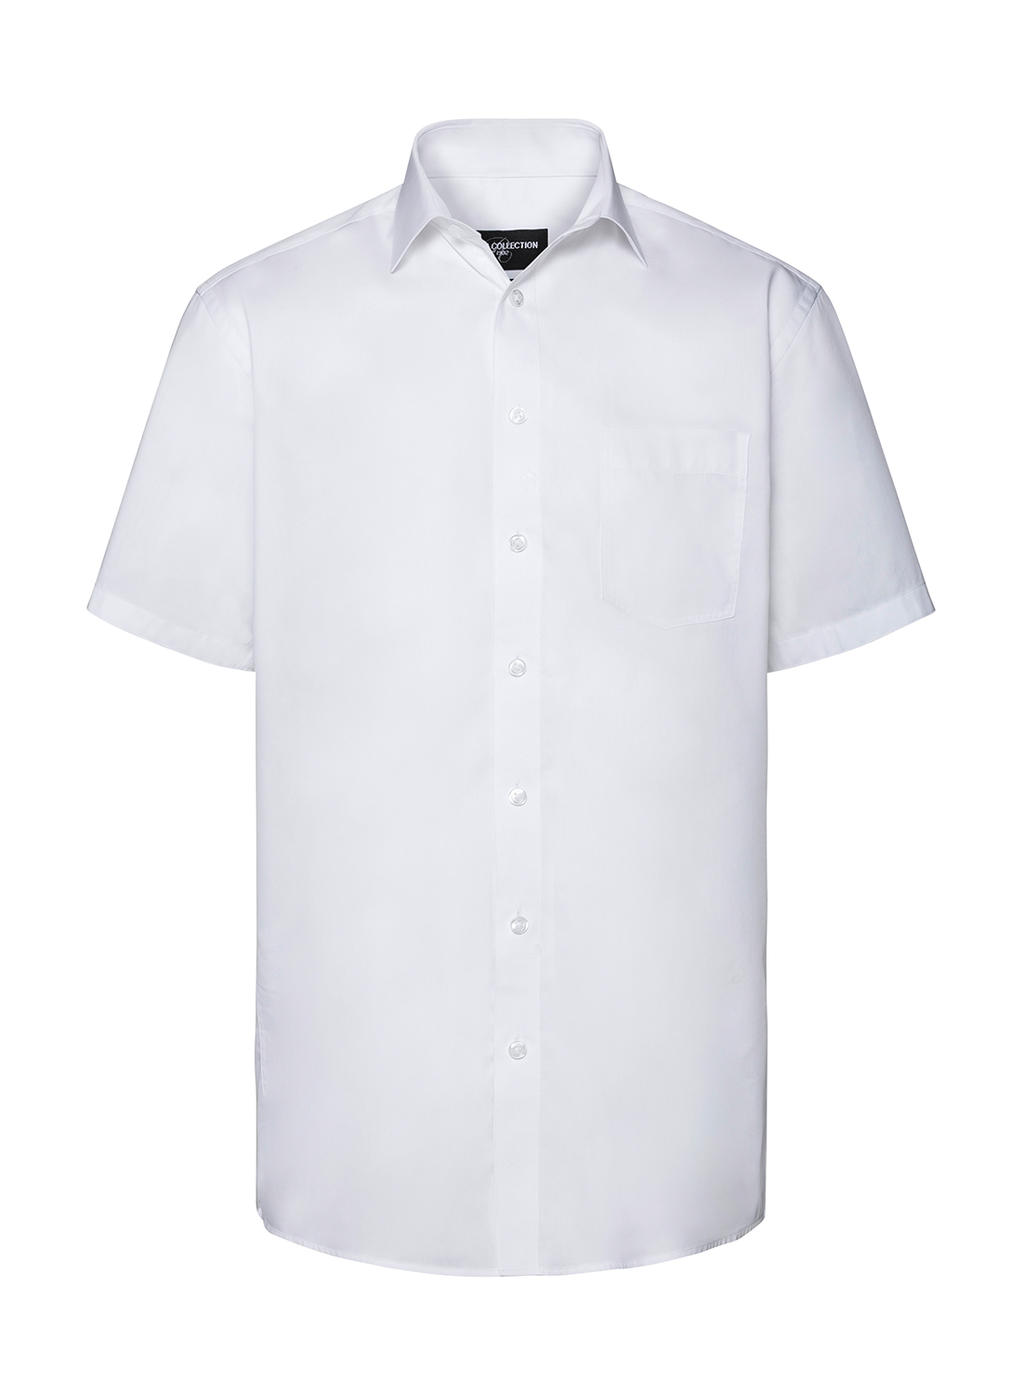 Men's Tailored Coolmax® Shirt